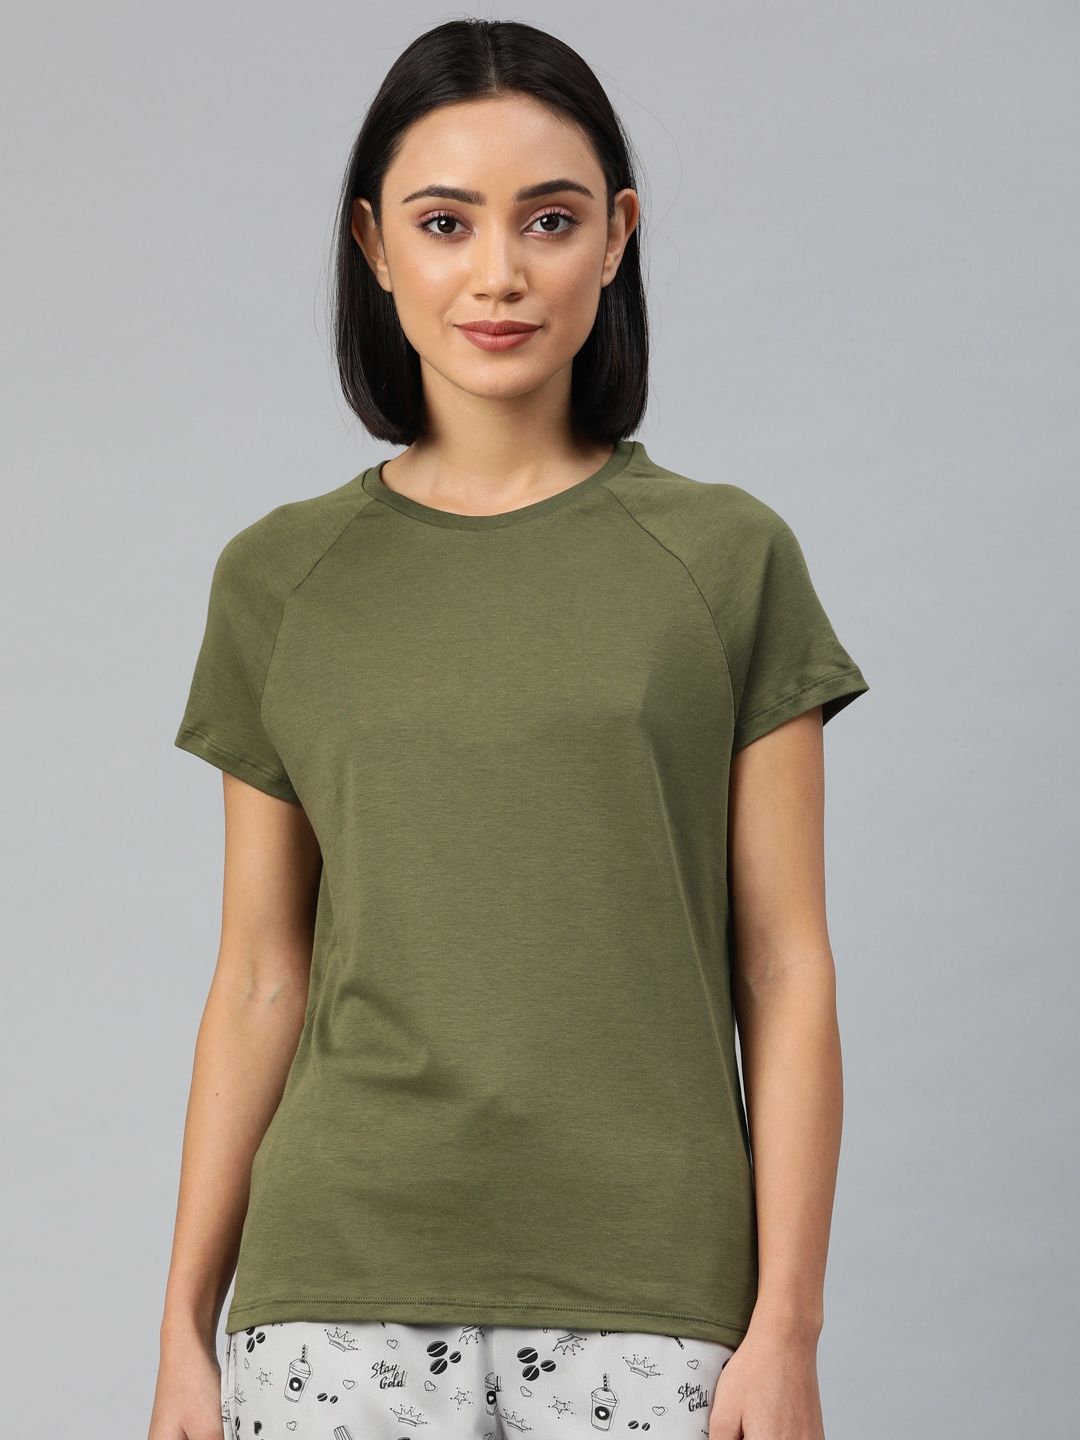 Van Heusen Women Olive Green Solid Lounge T-shirt Price in India